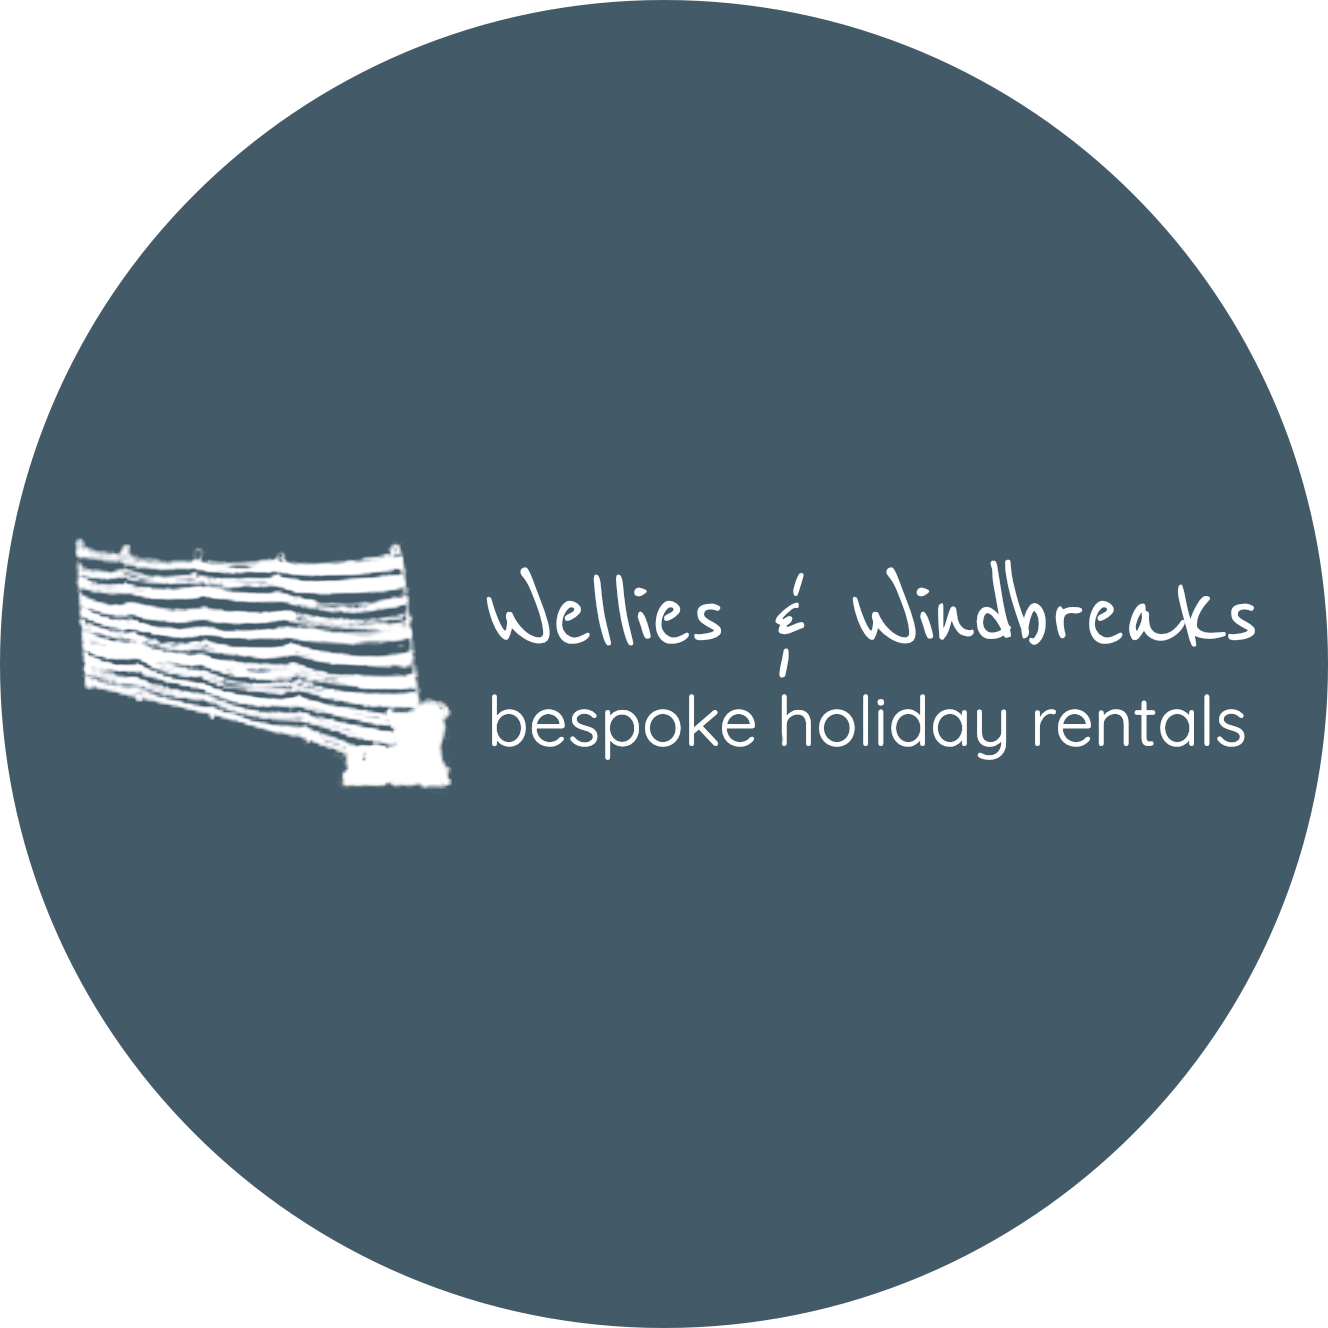 Wellies & windbreaks bespoke holiday rentals logo circle